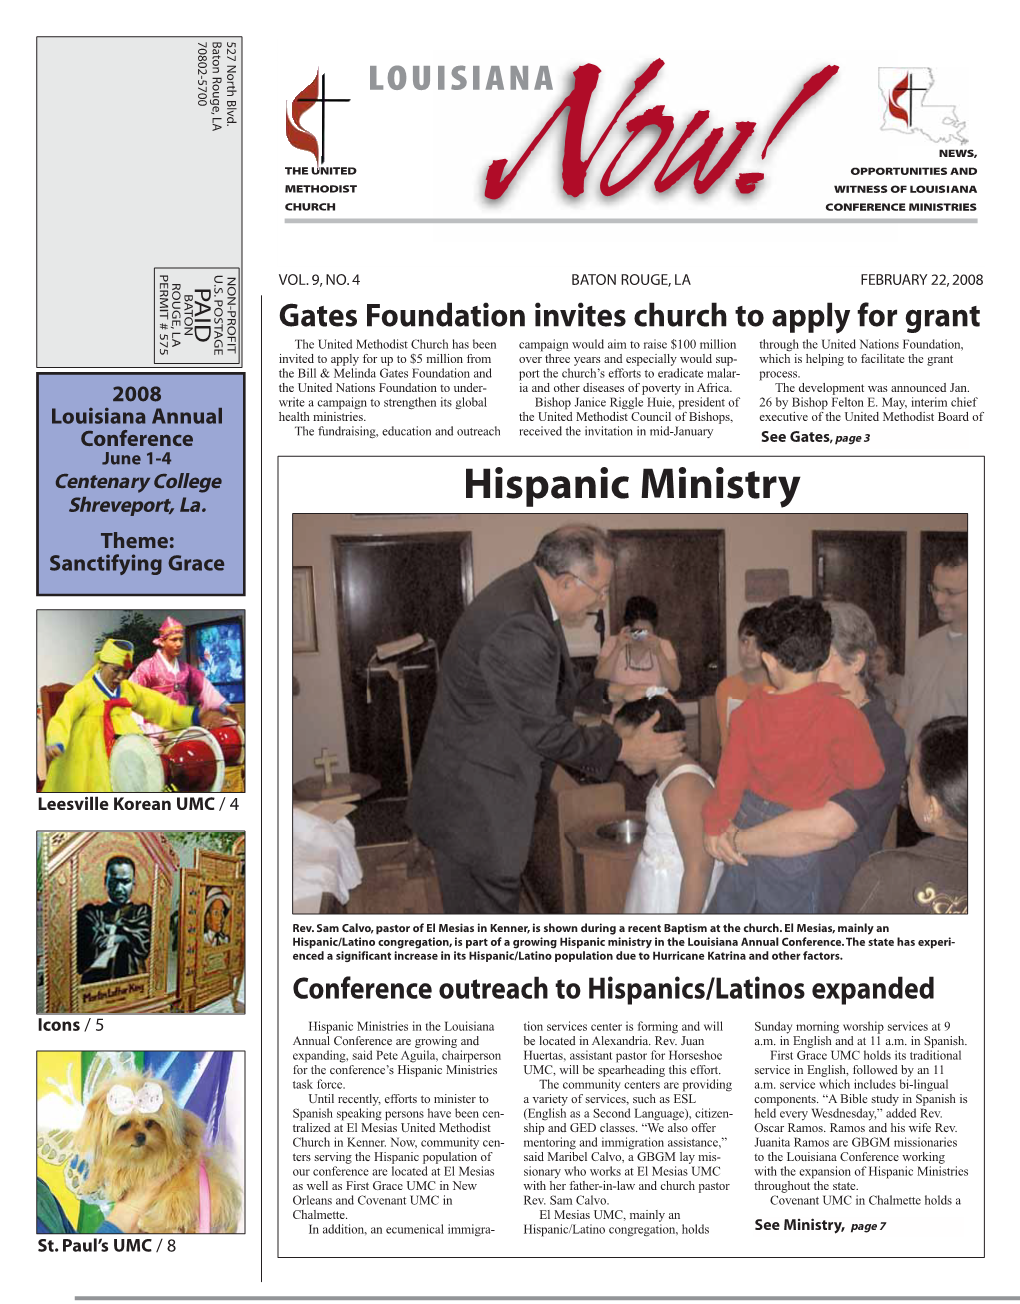 Hispanic Ministry Theme: Sanctifying Grace